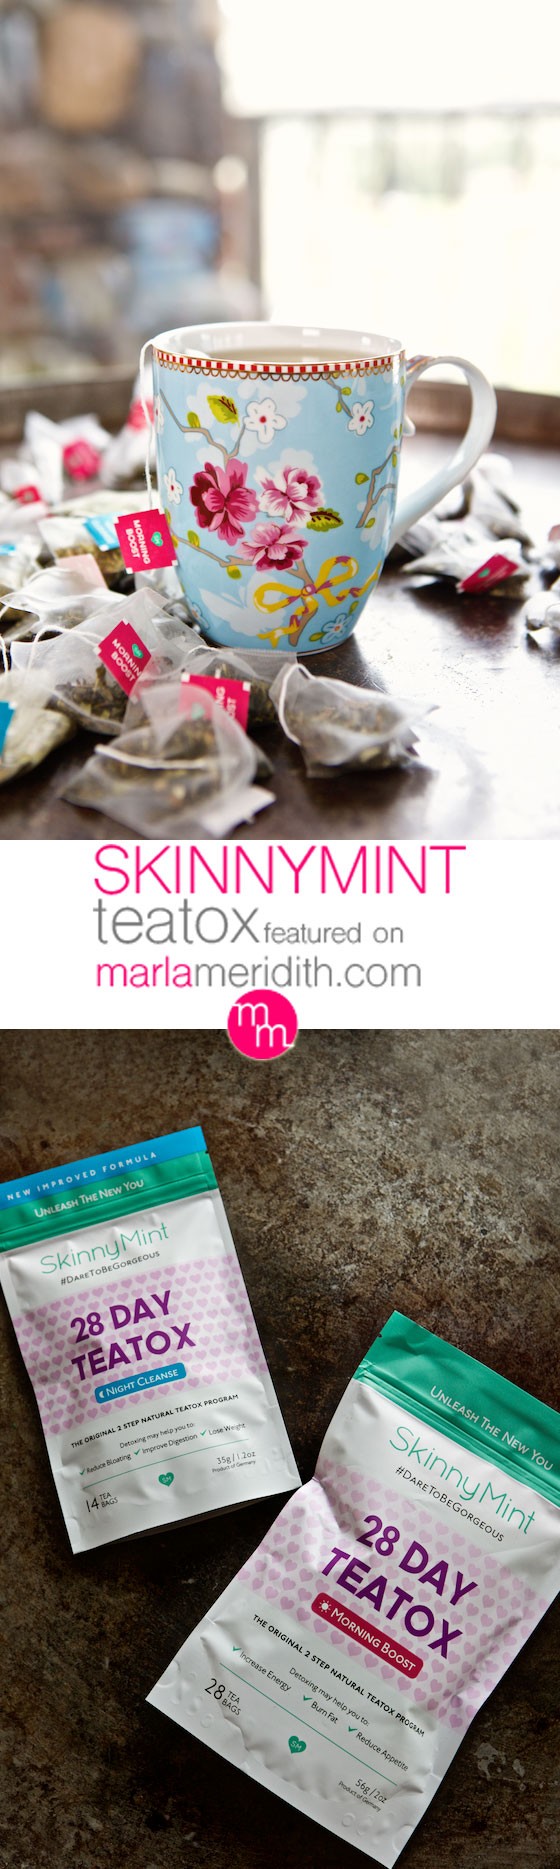 Get ready for bikini season with SkinnyMint Teatox | Featured on MarlaMeridith.com ( @marlameridith )